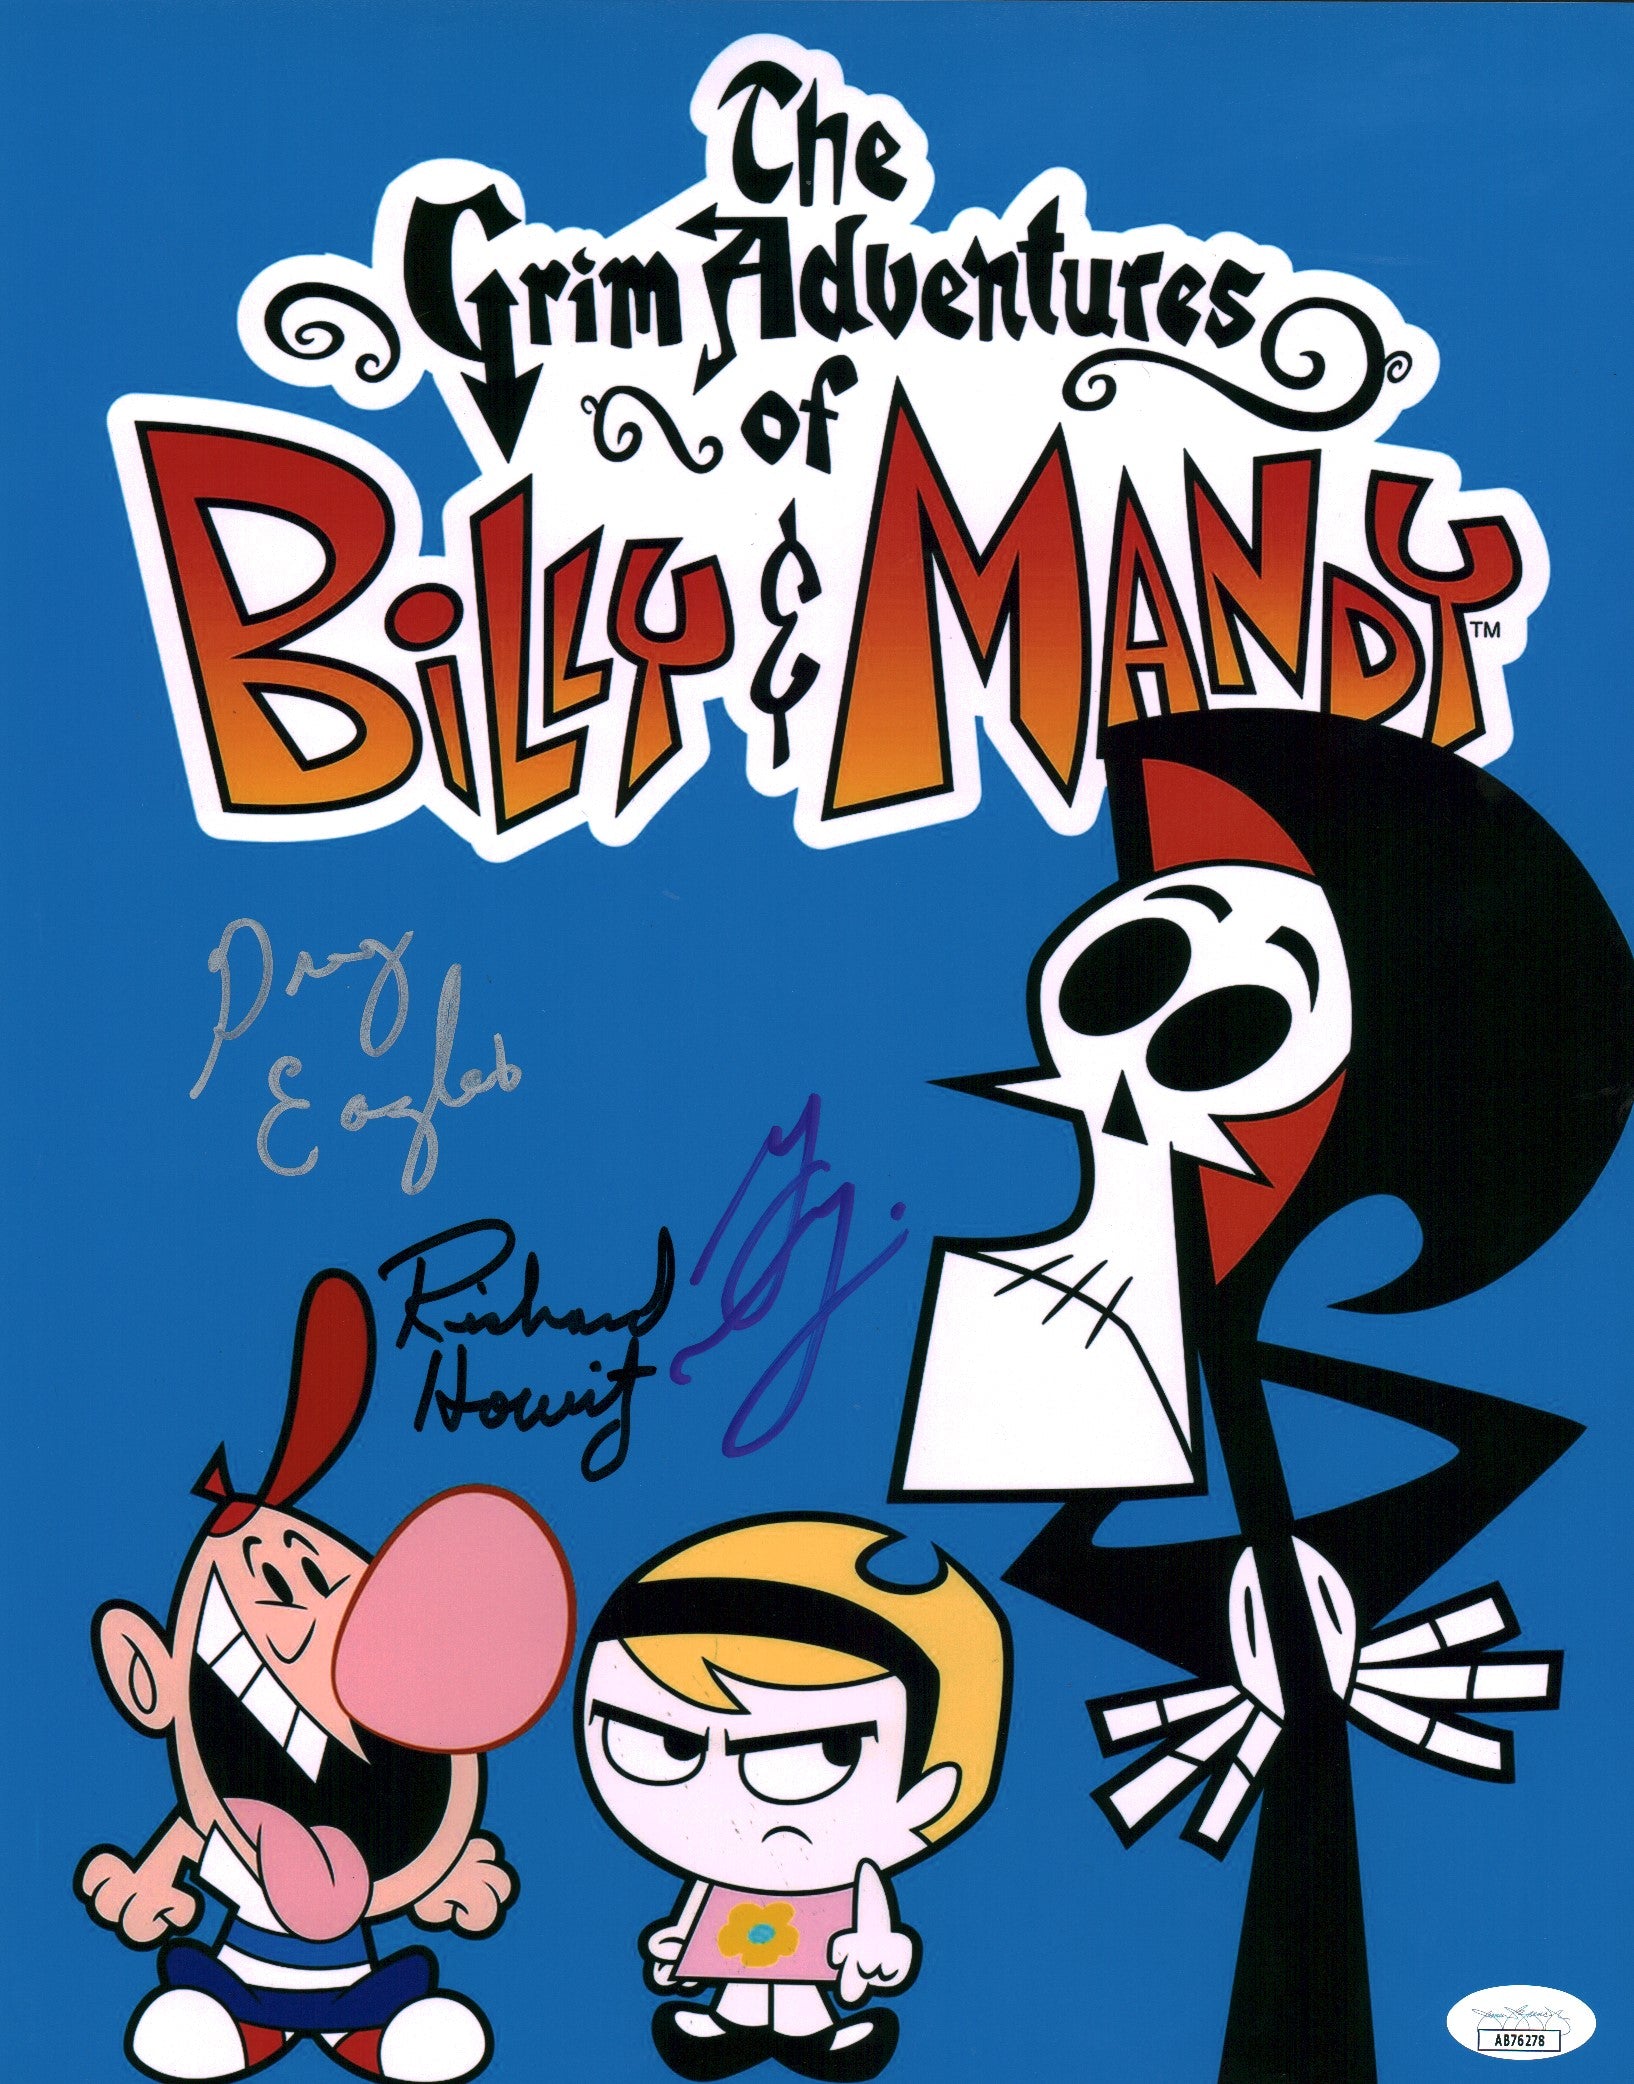 The Grim Adventures of Billy & Mandy 11x14 Cast x3 Mini Poster Signed Horvitz Eagles DeLisle JSA Certified Autograph